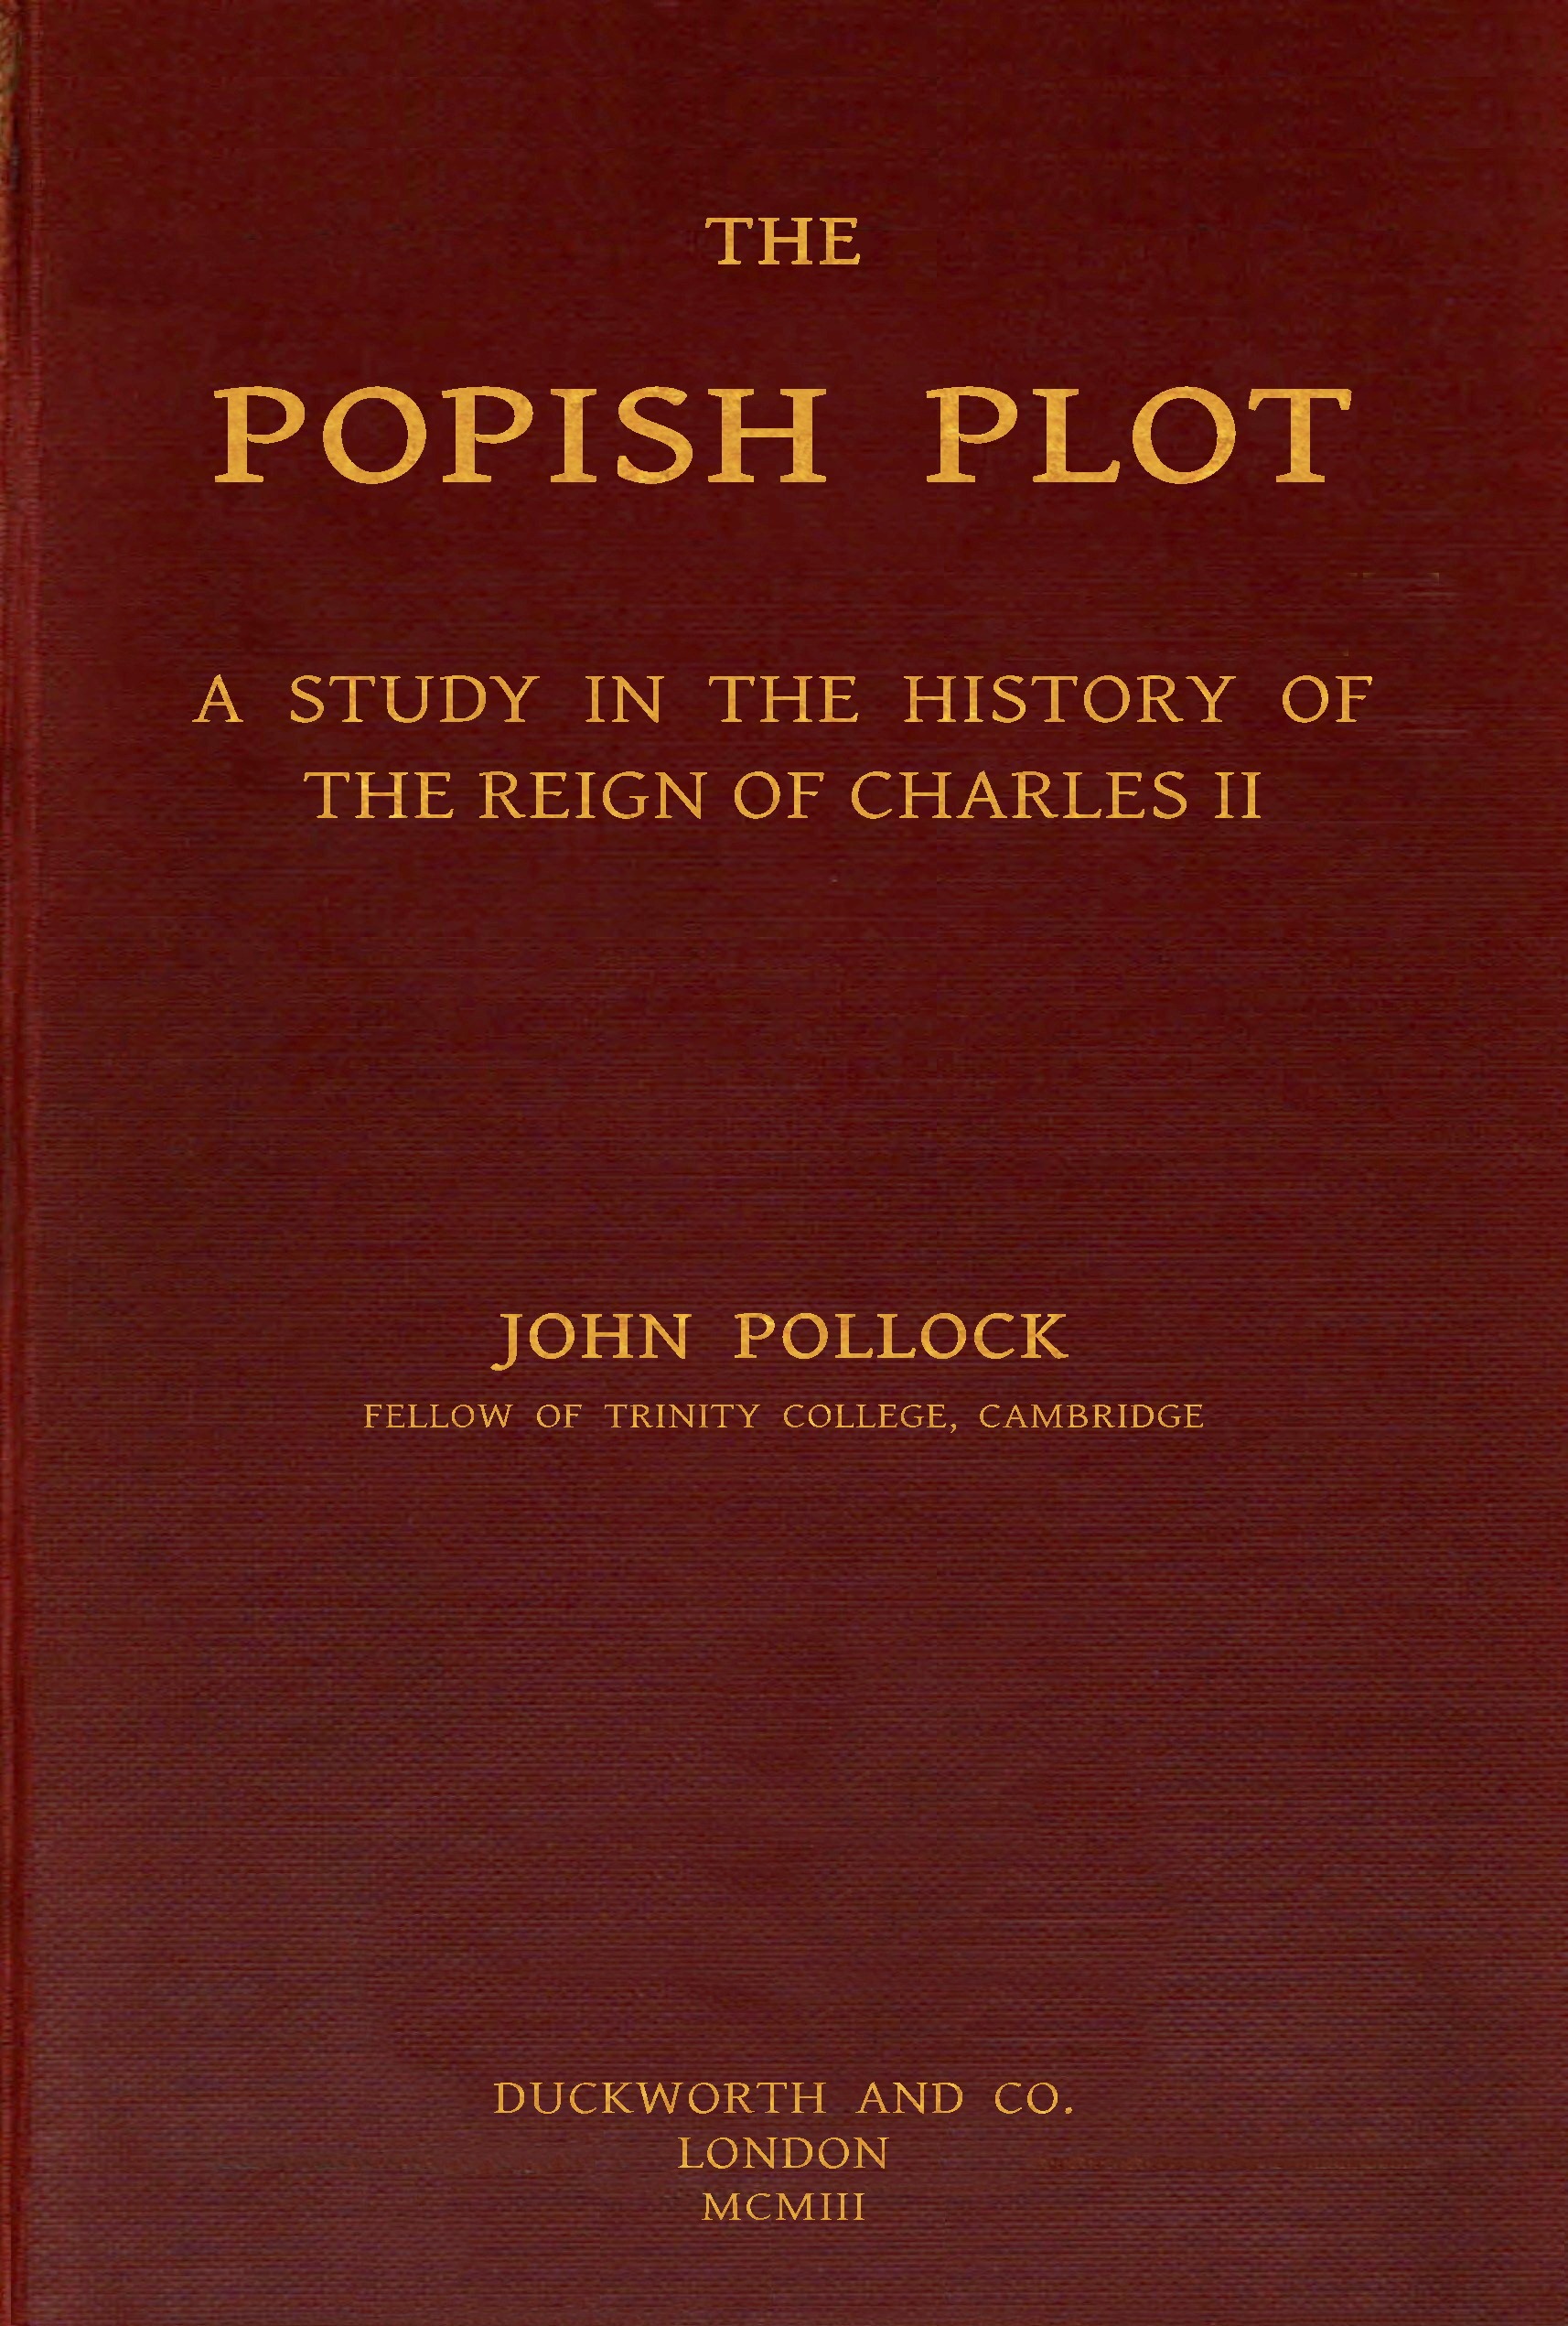 The Popish Plot, by John Pollock—A Project Gutenberg eBook